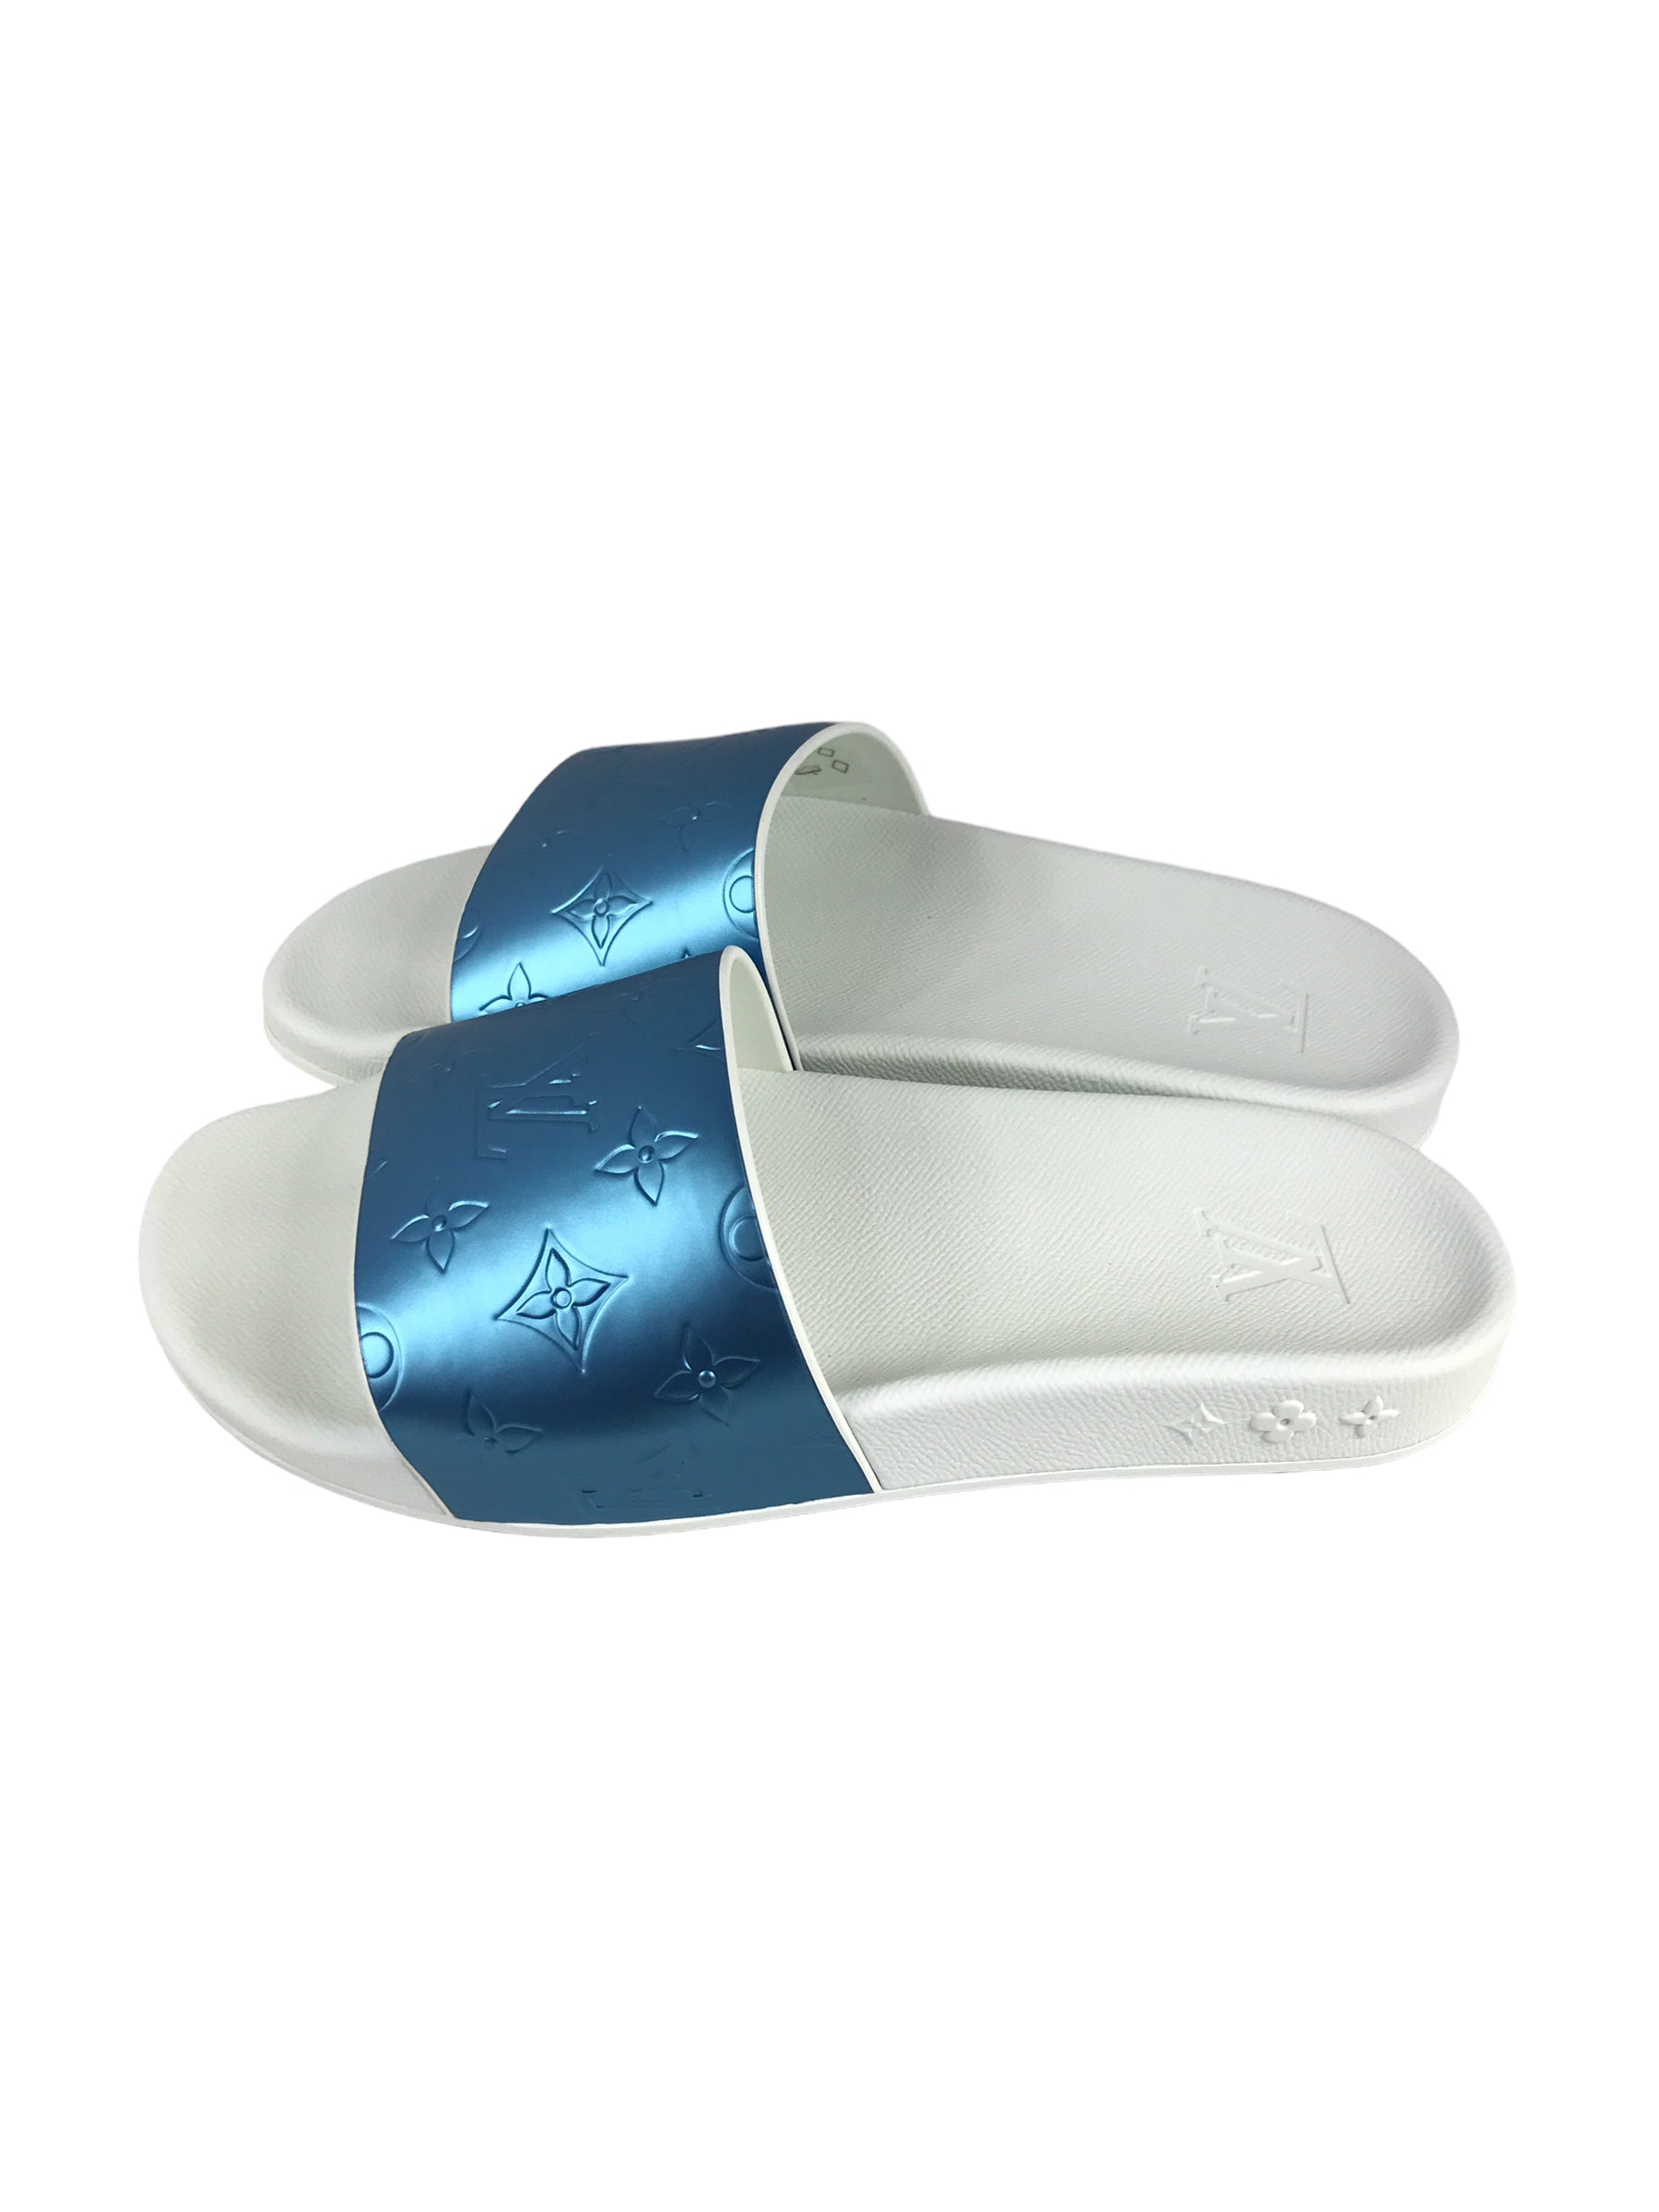 Louis Vuitton White and Blue Metallic Waterfront Mule Slides